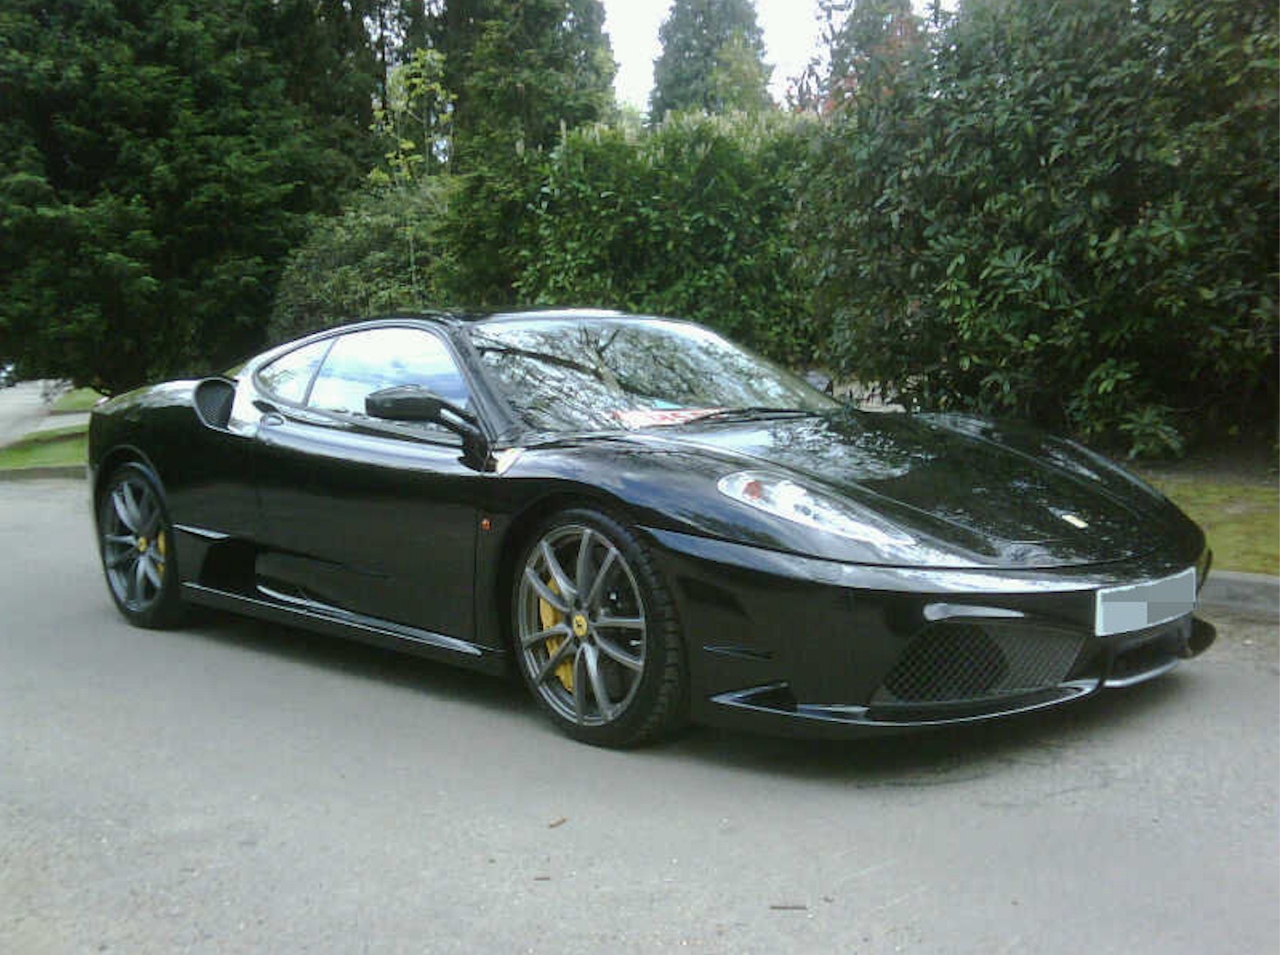 Sarju Popat traded in luxury cars, like the Ferrari F430 Scuderia pictured